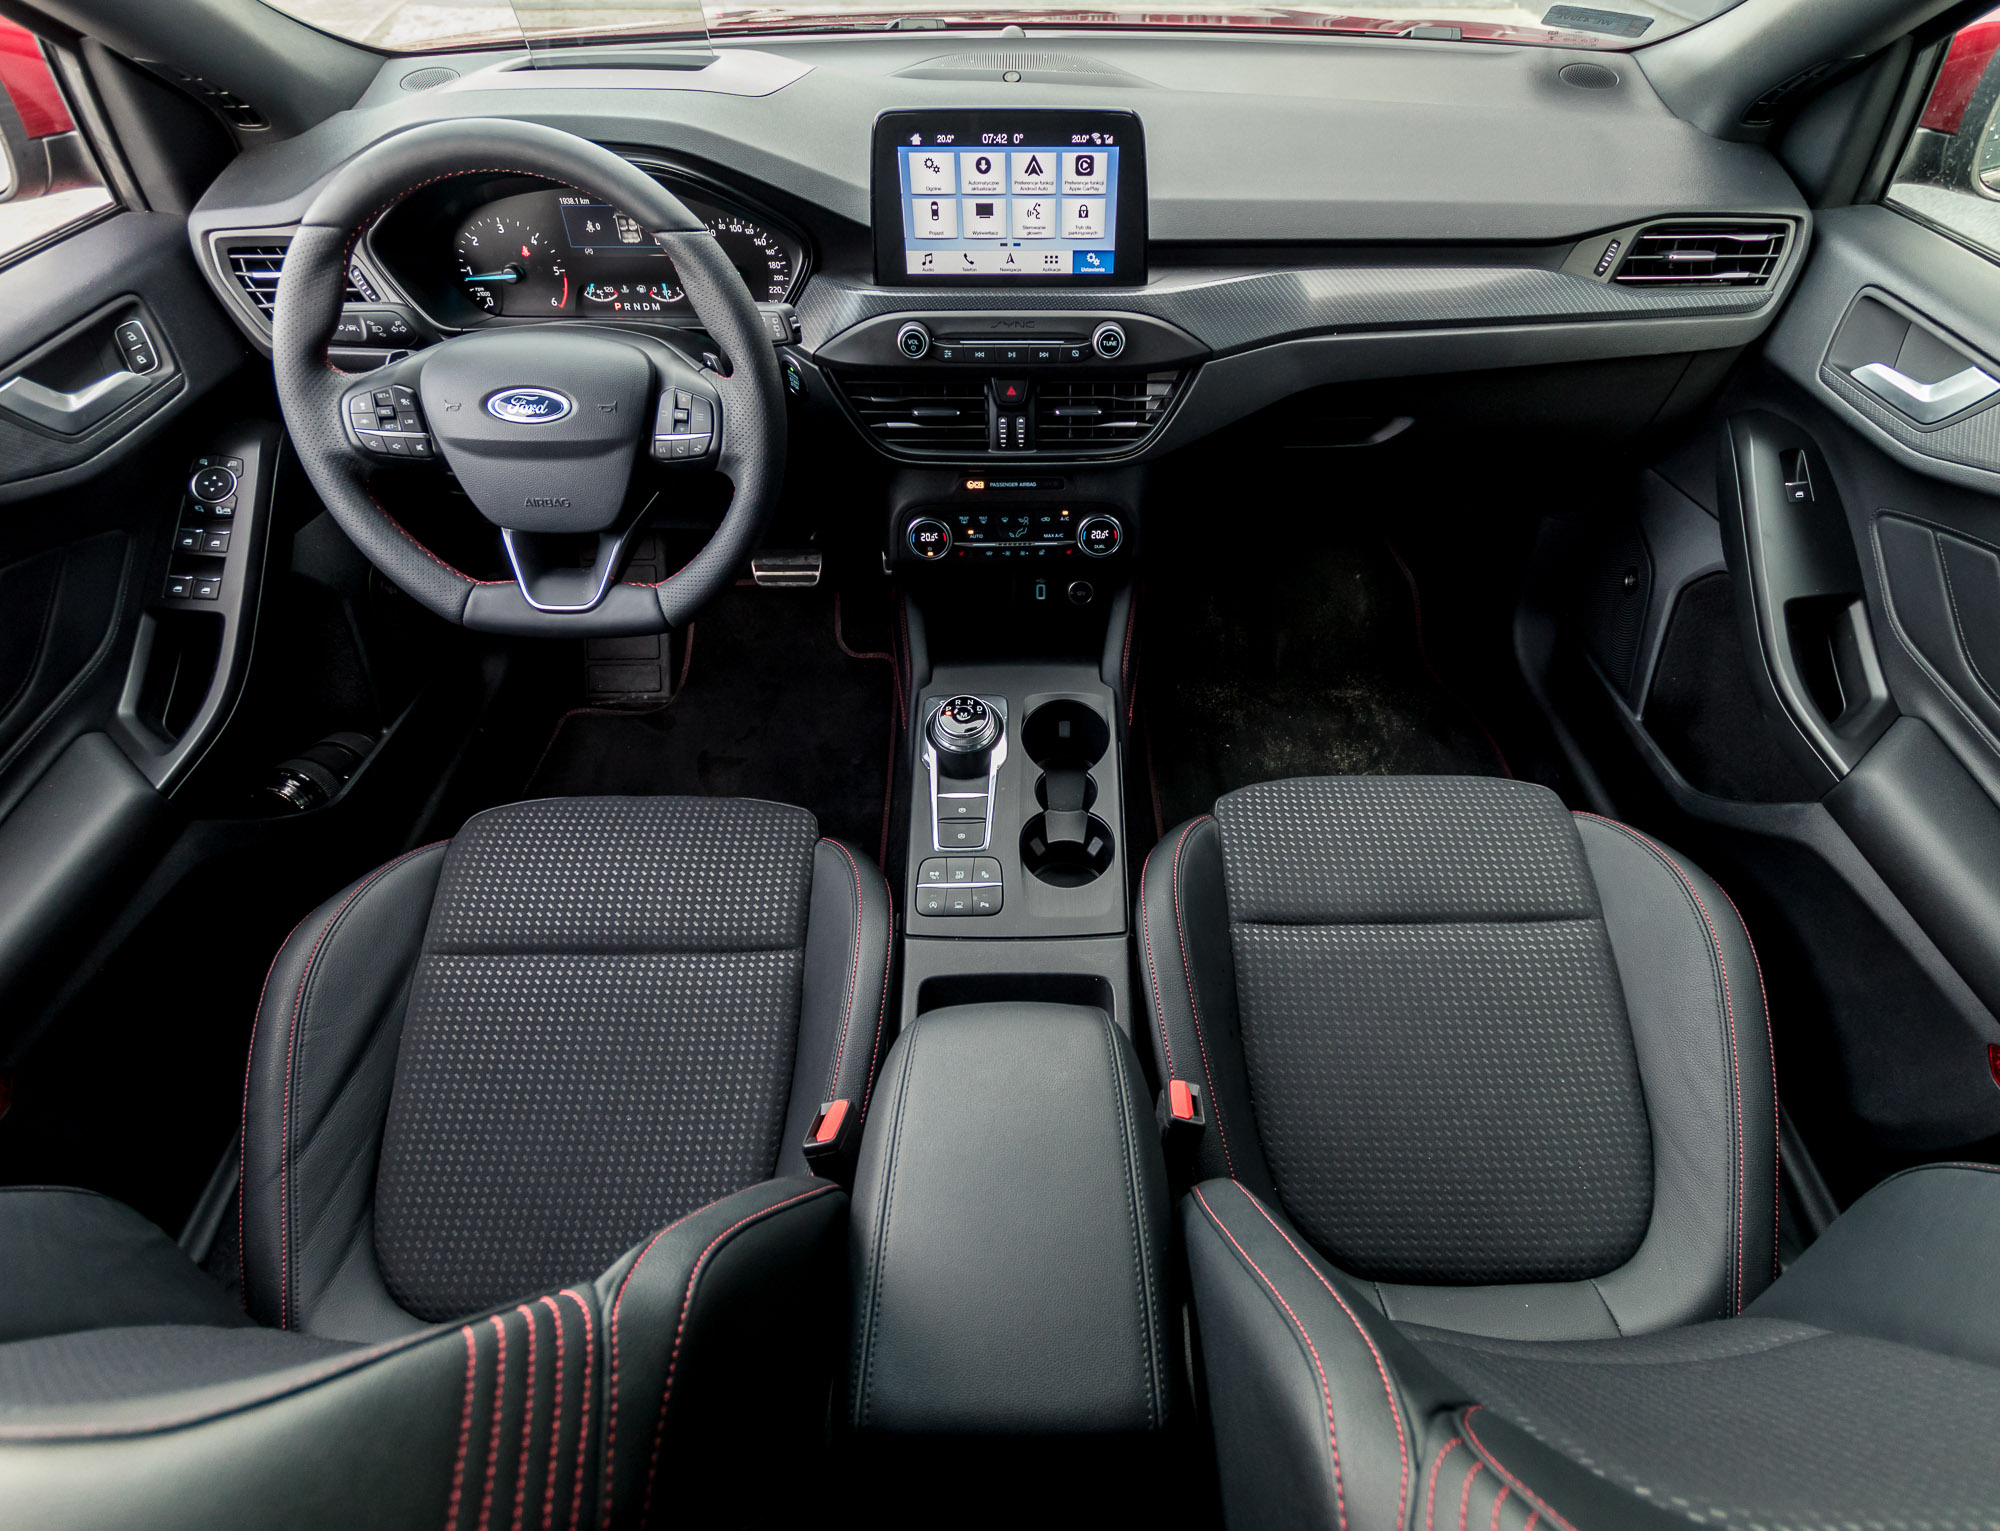 Ford Focus IV 2019 test